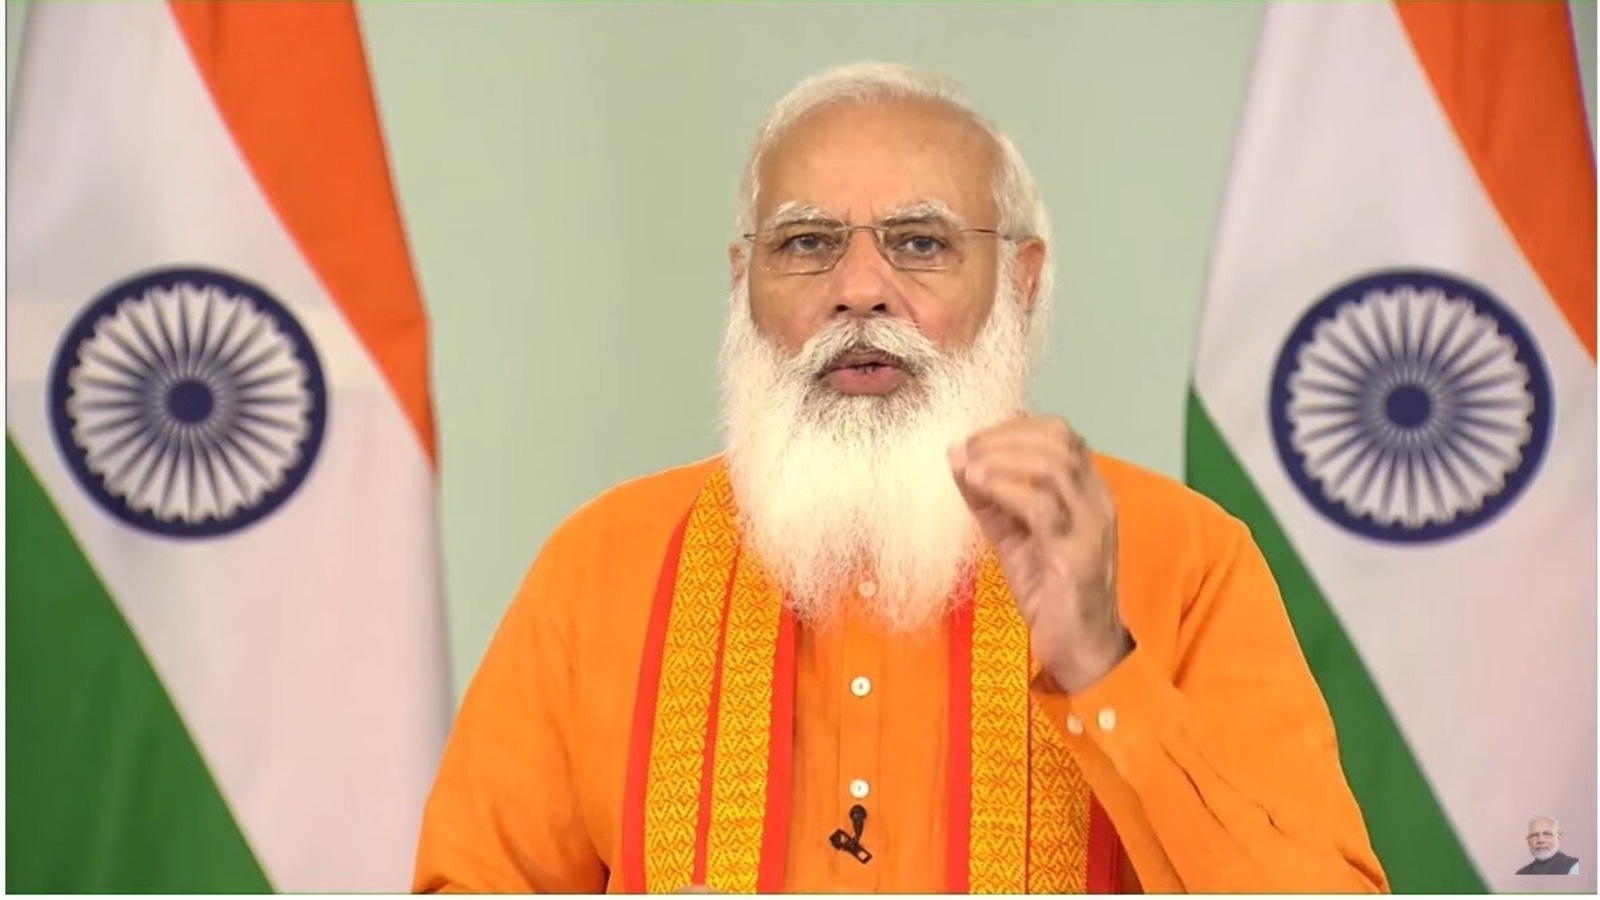 Yoga a ray of hope amid Covid-19': PM Modi in International Yoga Day  address | Latest News India - Hindustan Times